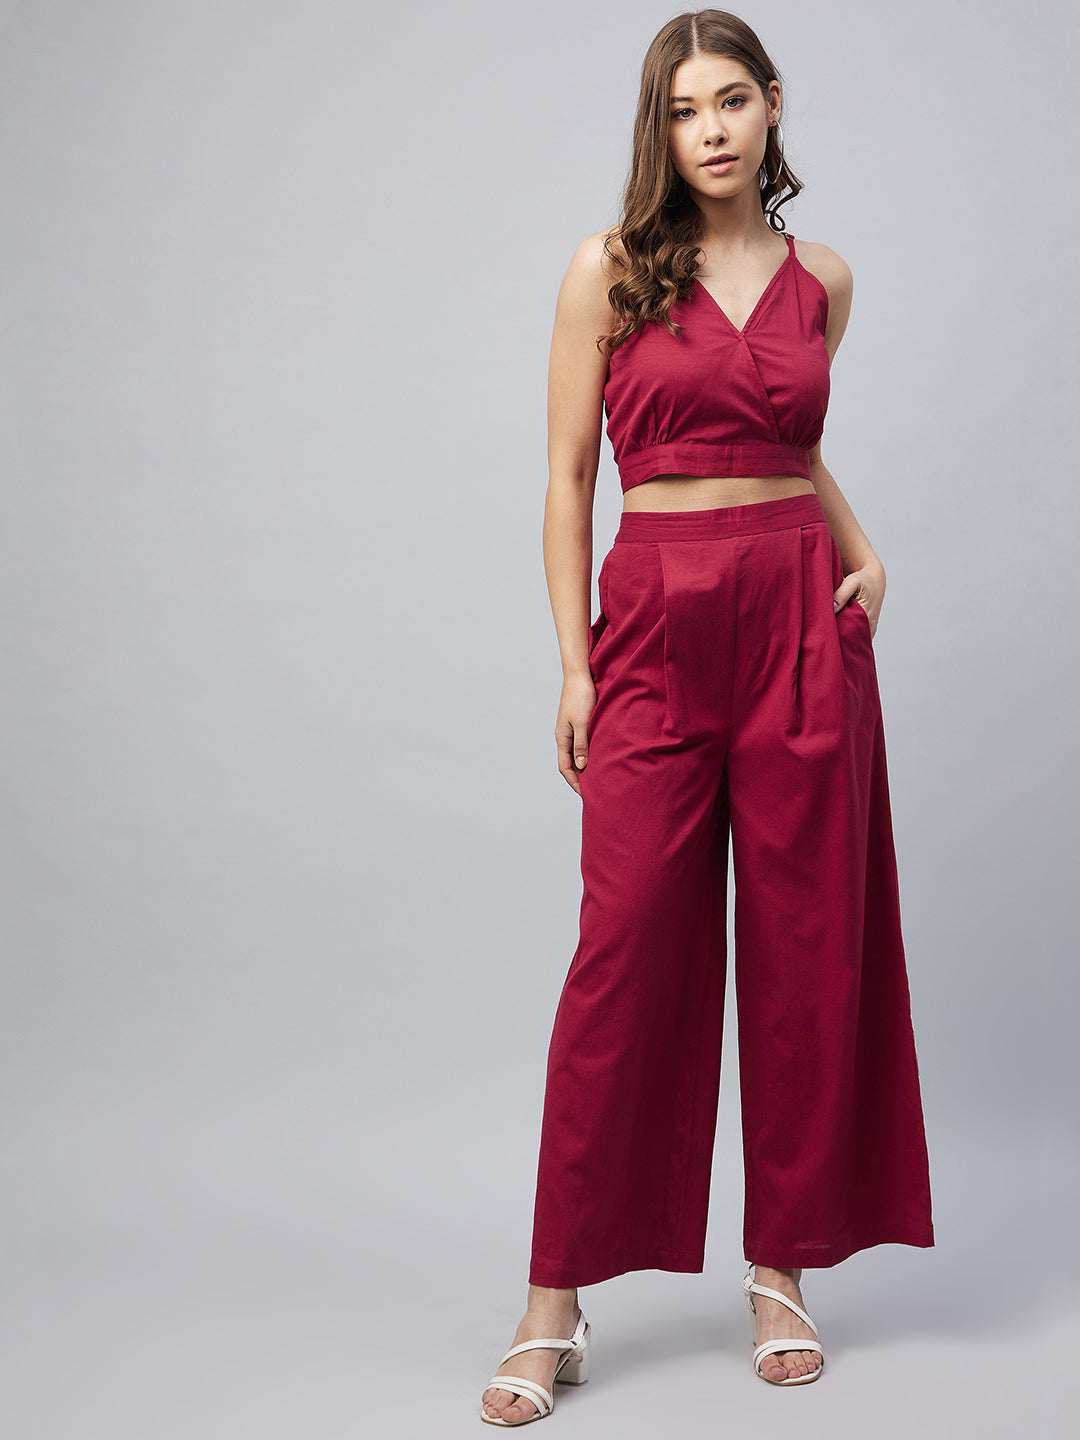 Women's Cotton Linen Maroon Crop Top and Palazzo set